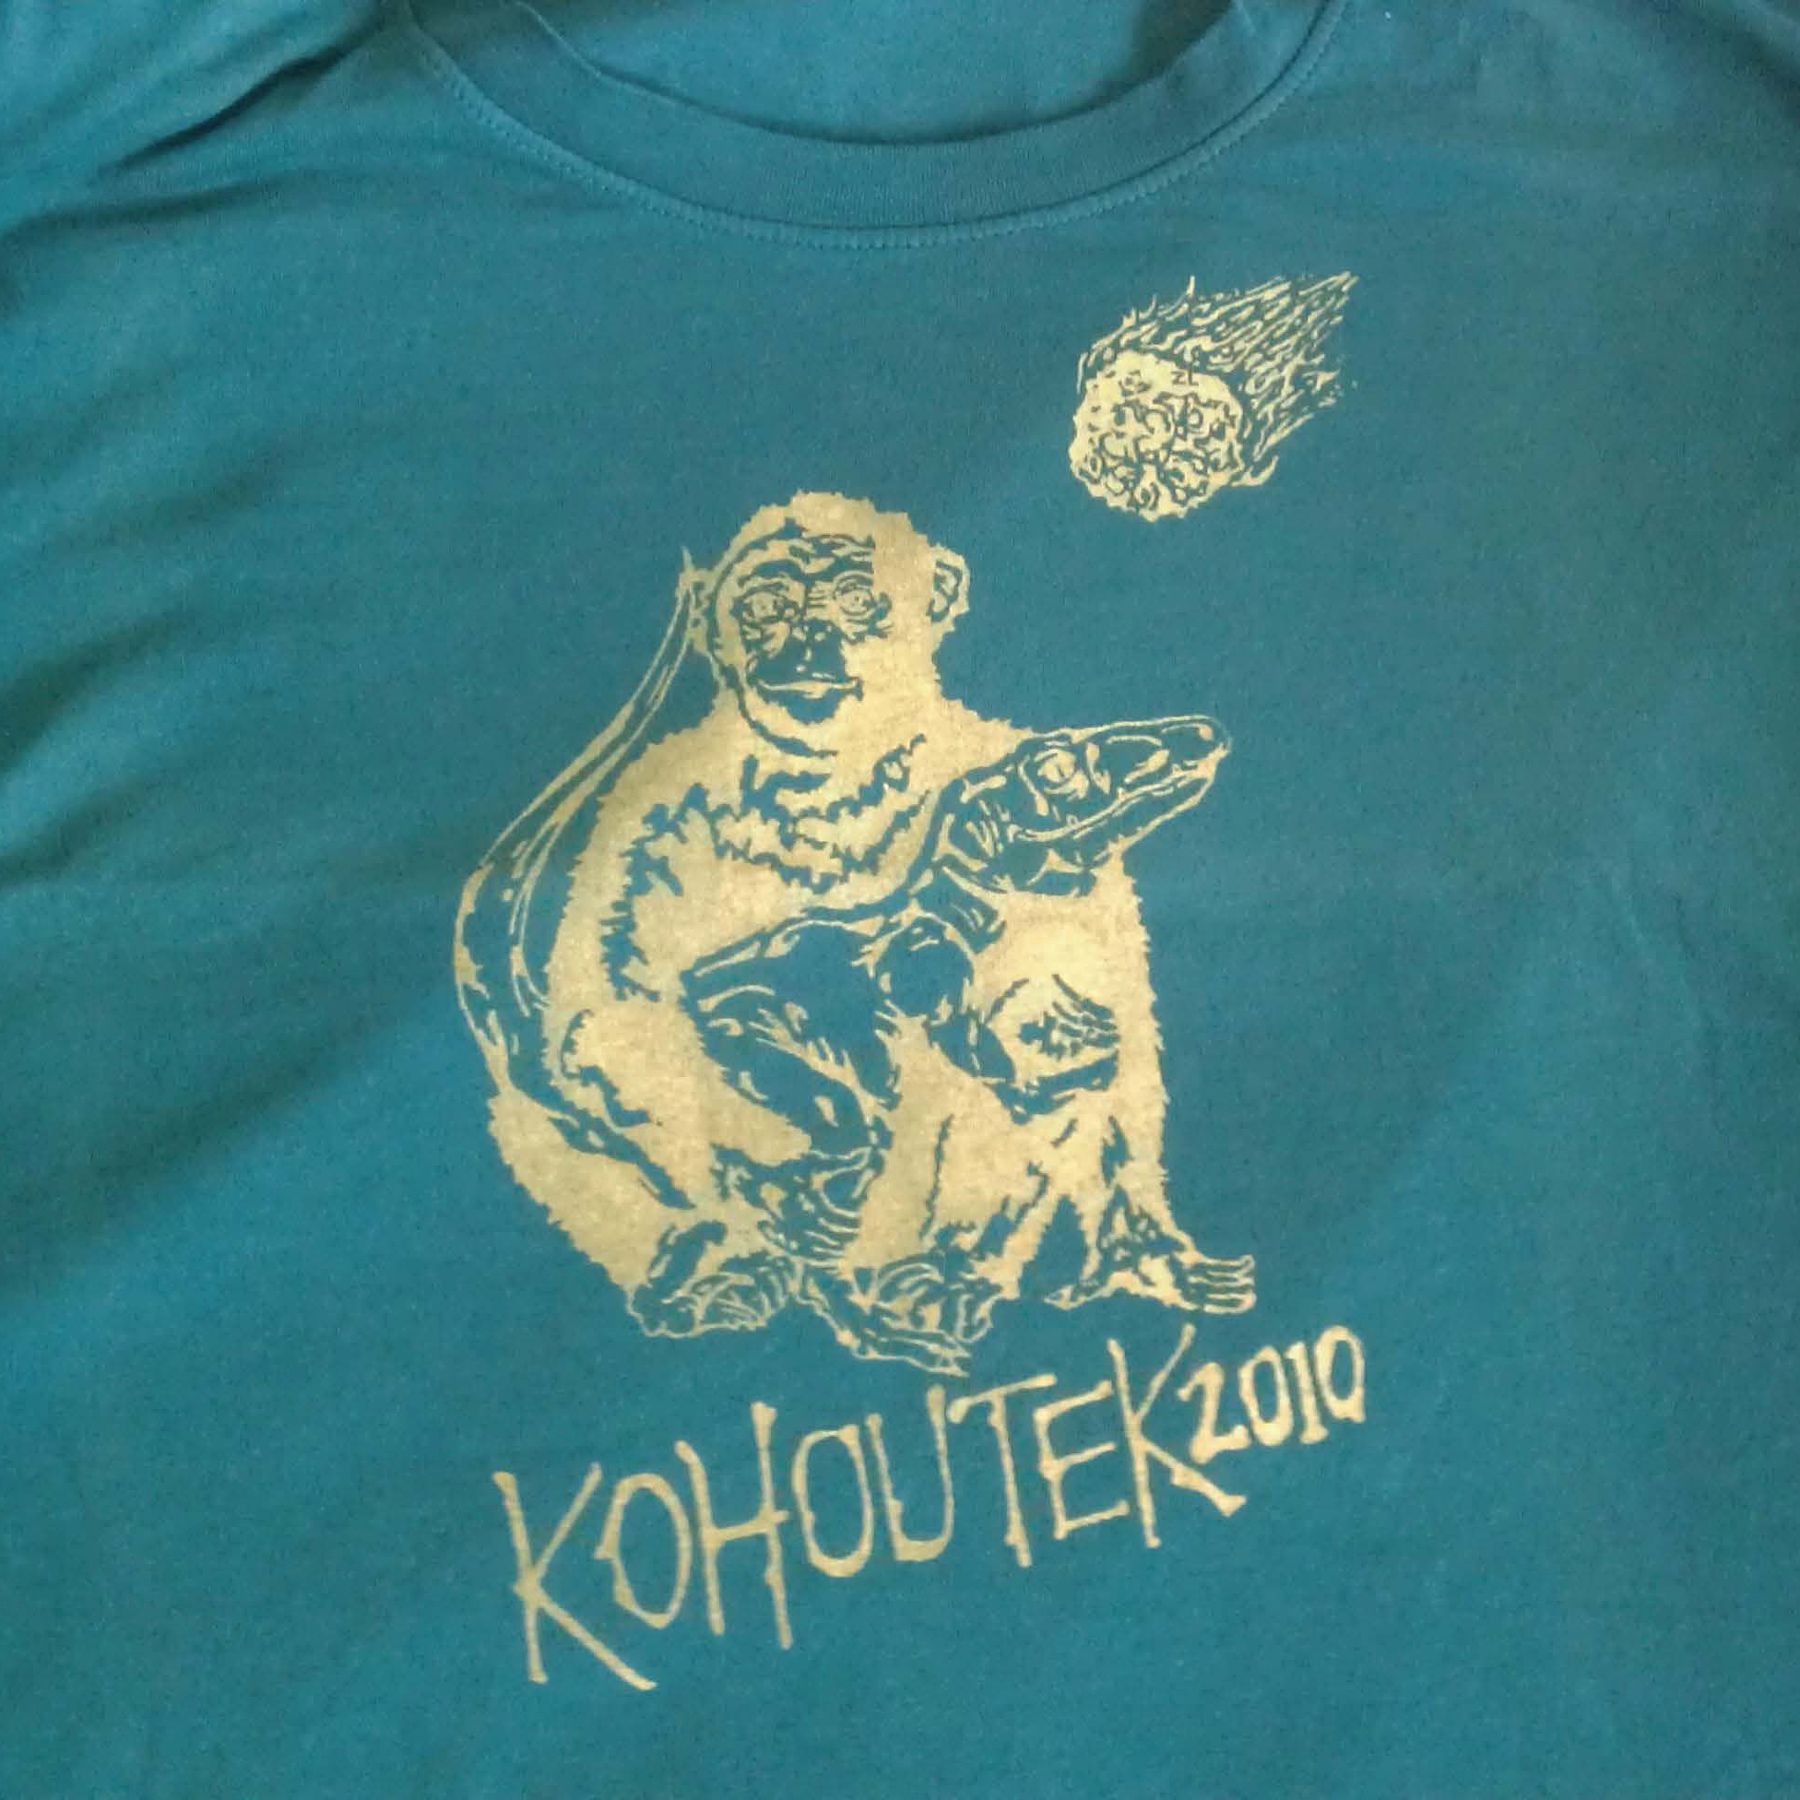 kohoutek 2010 tshirt